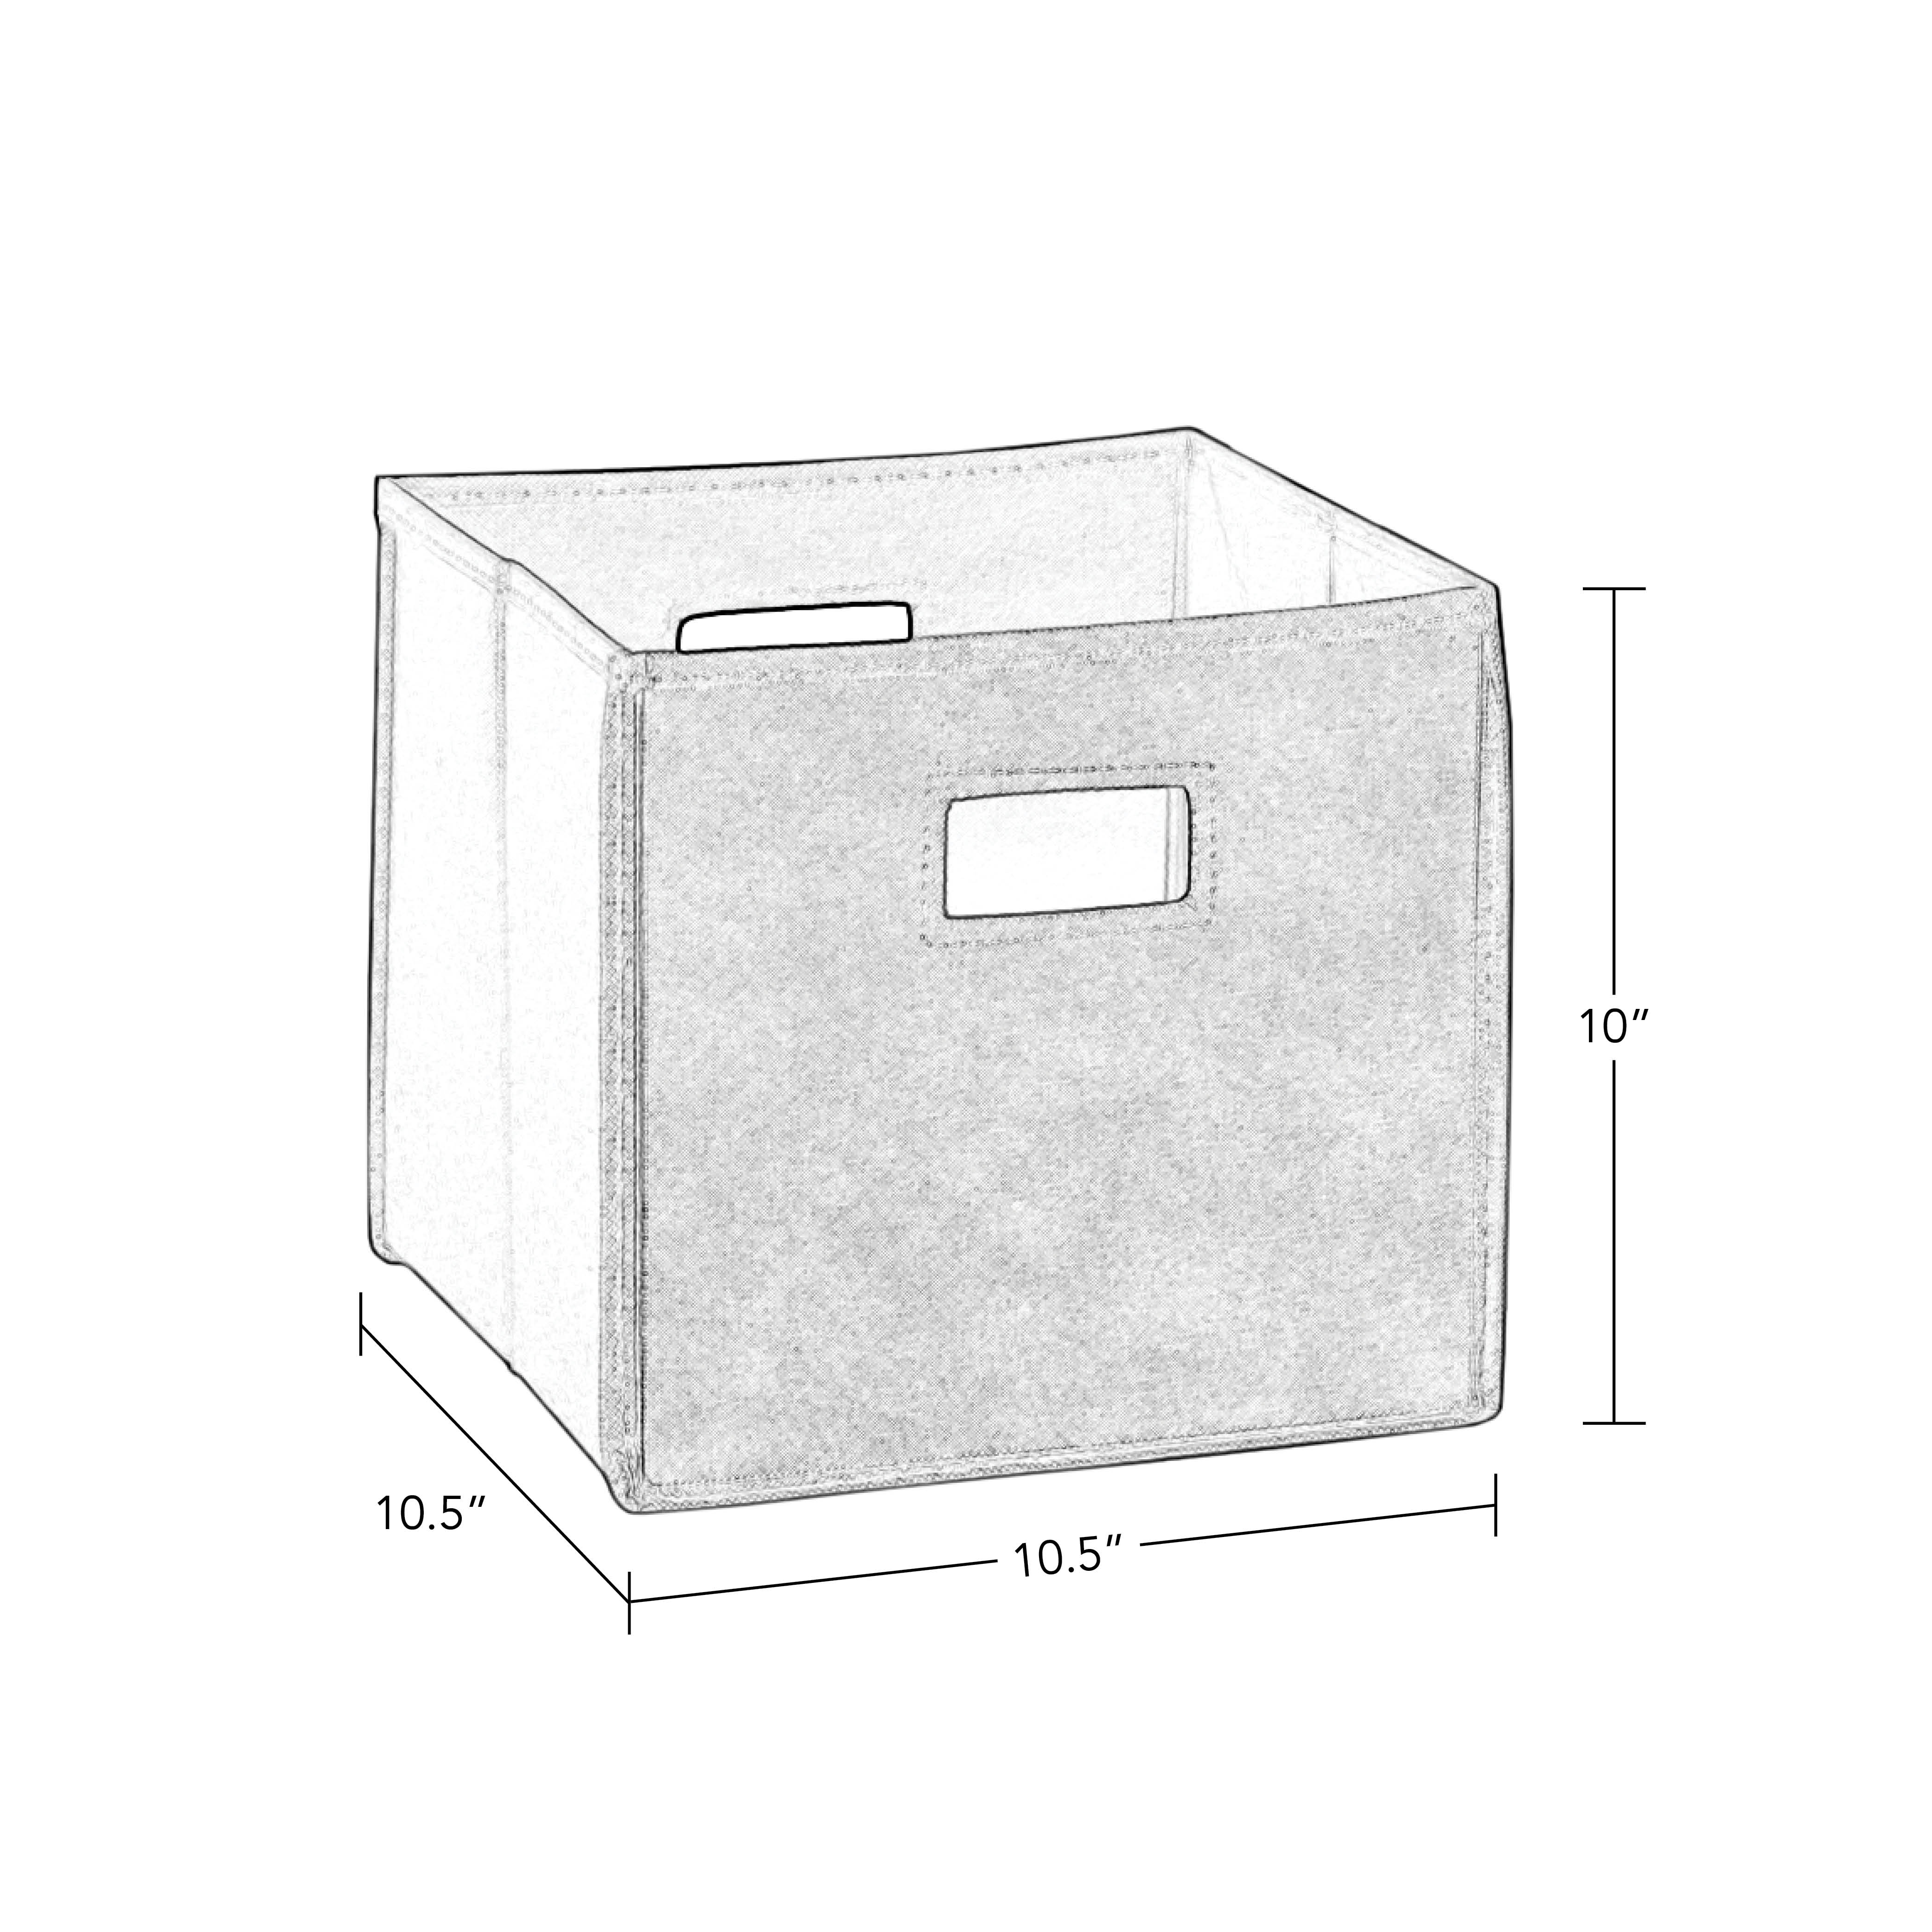 RiverRidge Home Folding Fabric Cube Storage Bin Set of 2 - Black - image 3 of 7